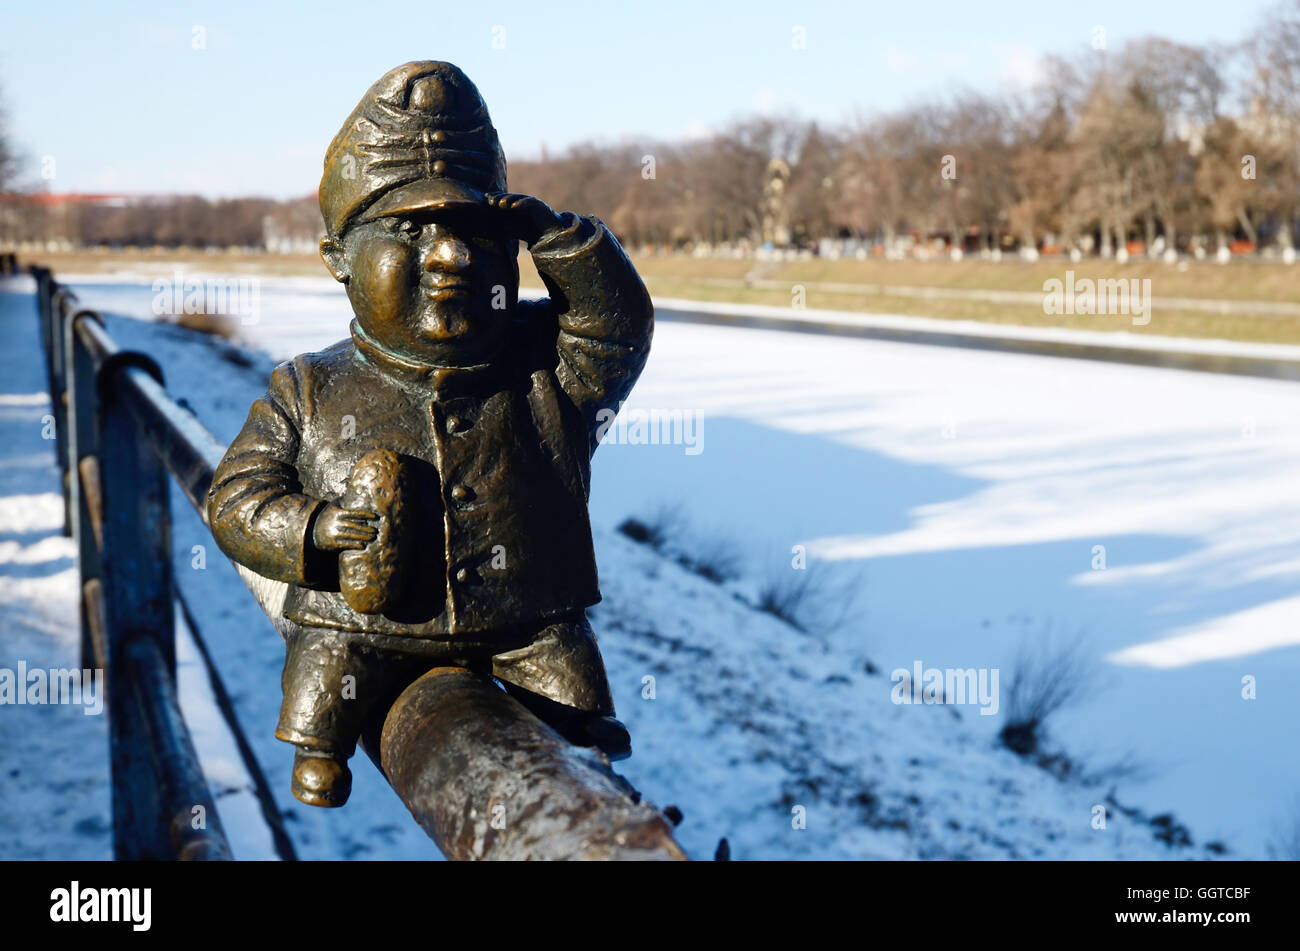 UZHGOROD,UKRAINE - JANUARY 6,2015:Small bronze statue of literary personage Good Soldier Svejks at Kyivska embankment of river U Stock Photo